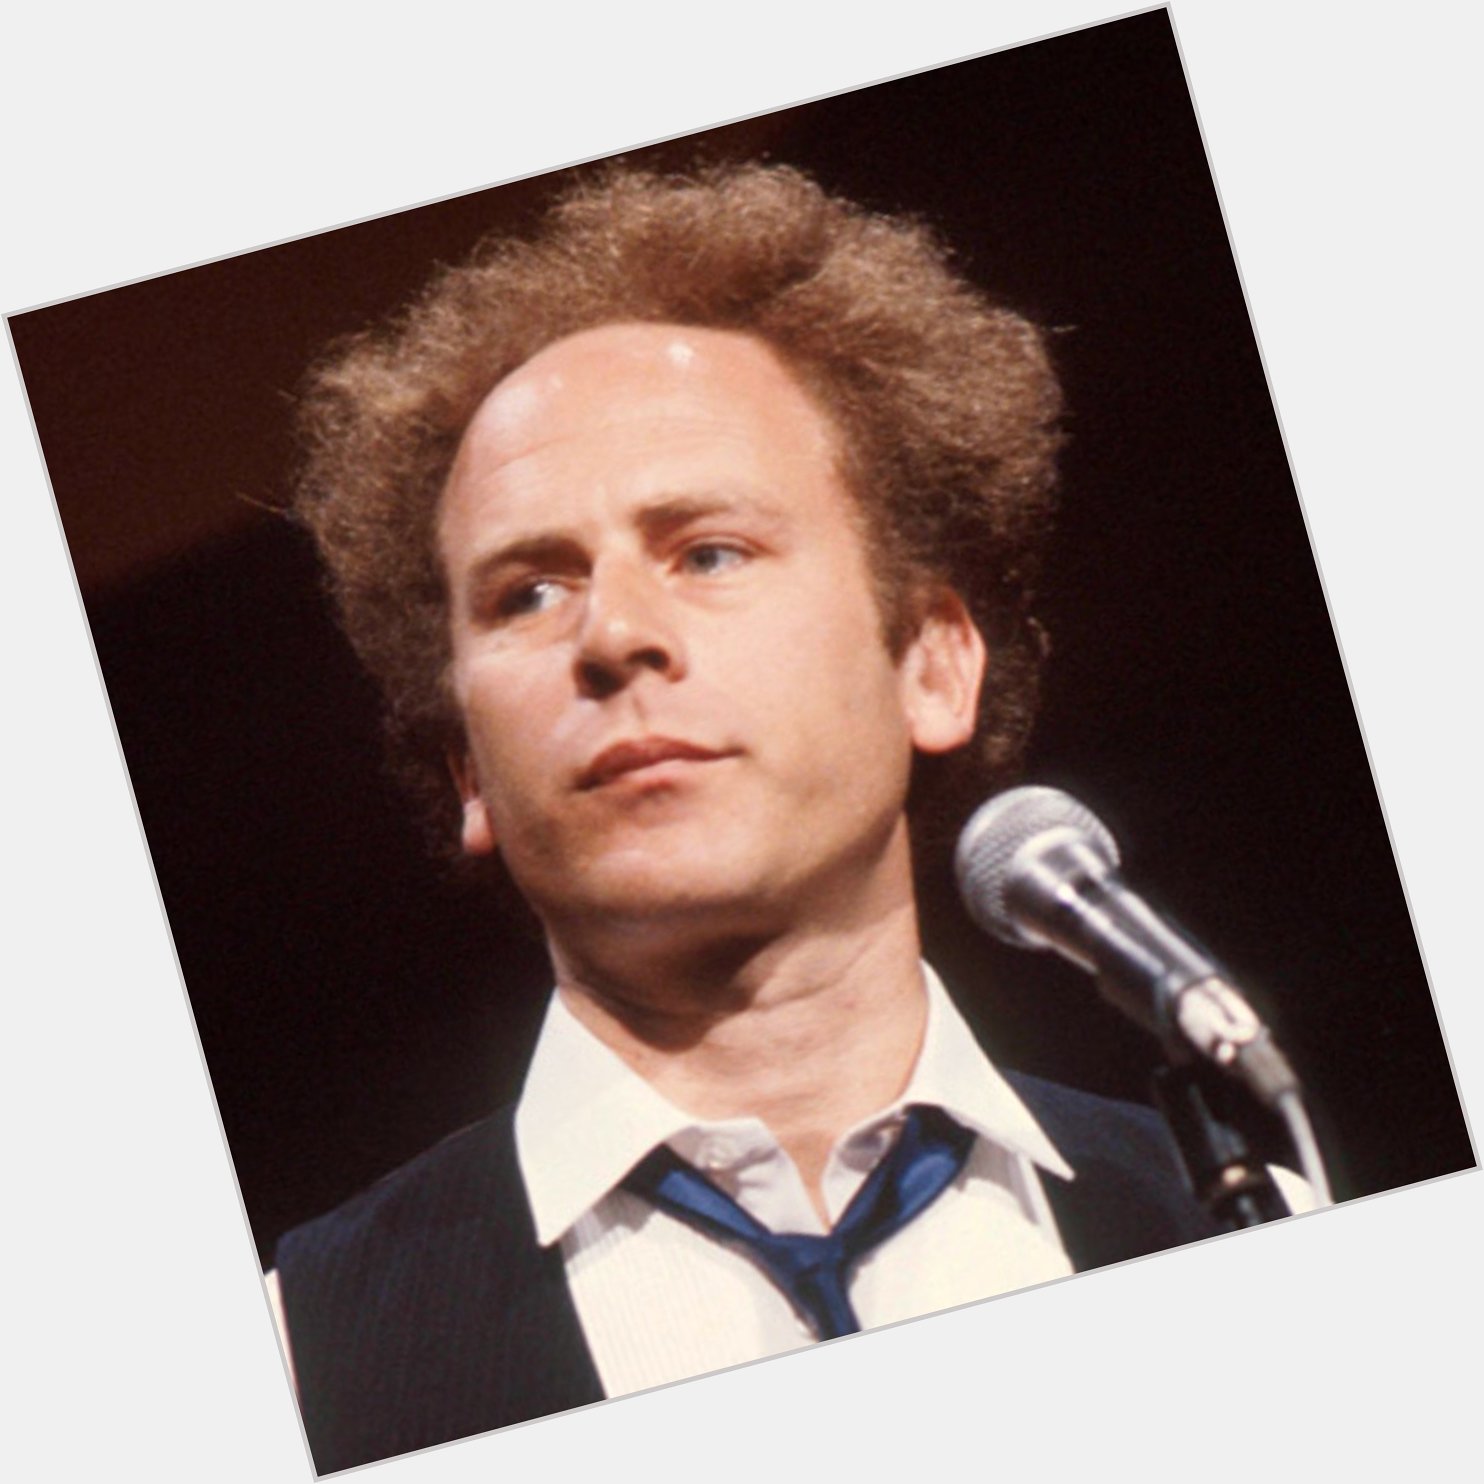 Happy birthday to Rock and Roll Hall of Famer, Art Garfunkel! 